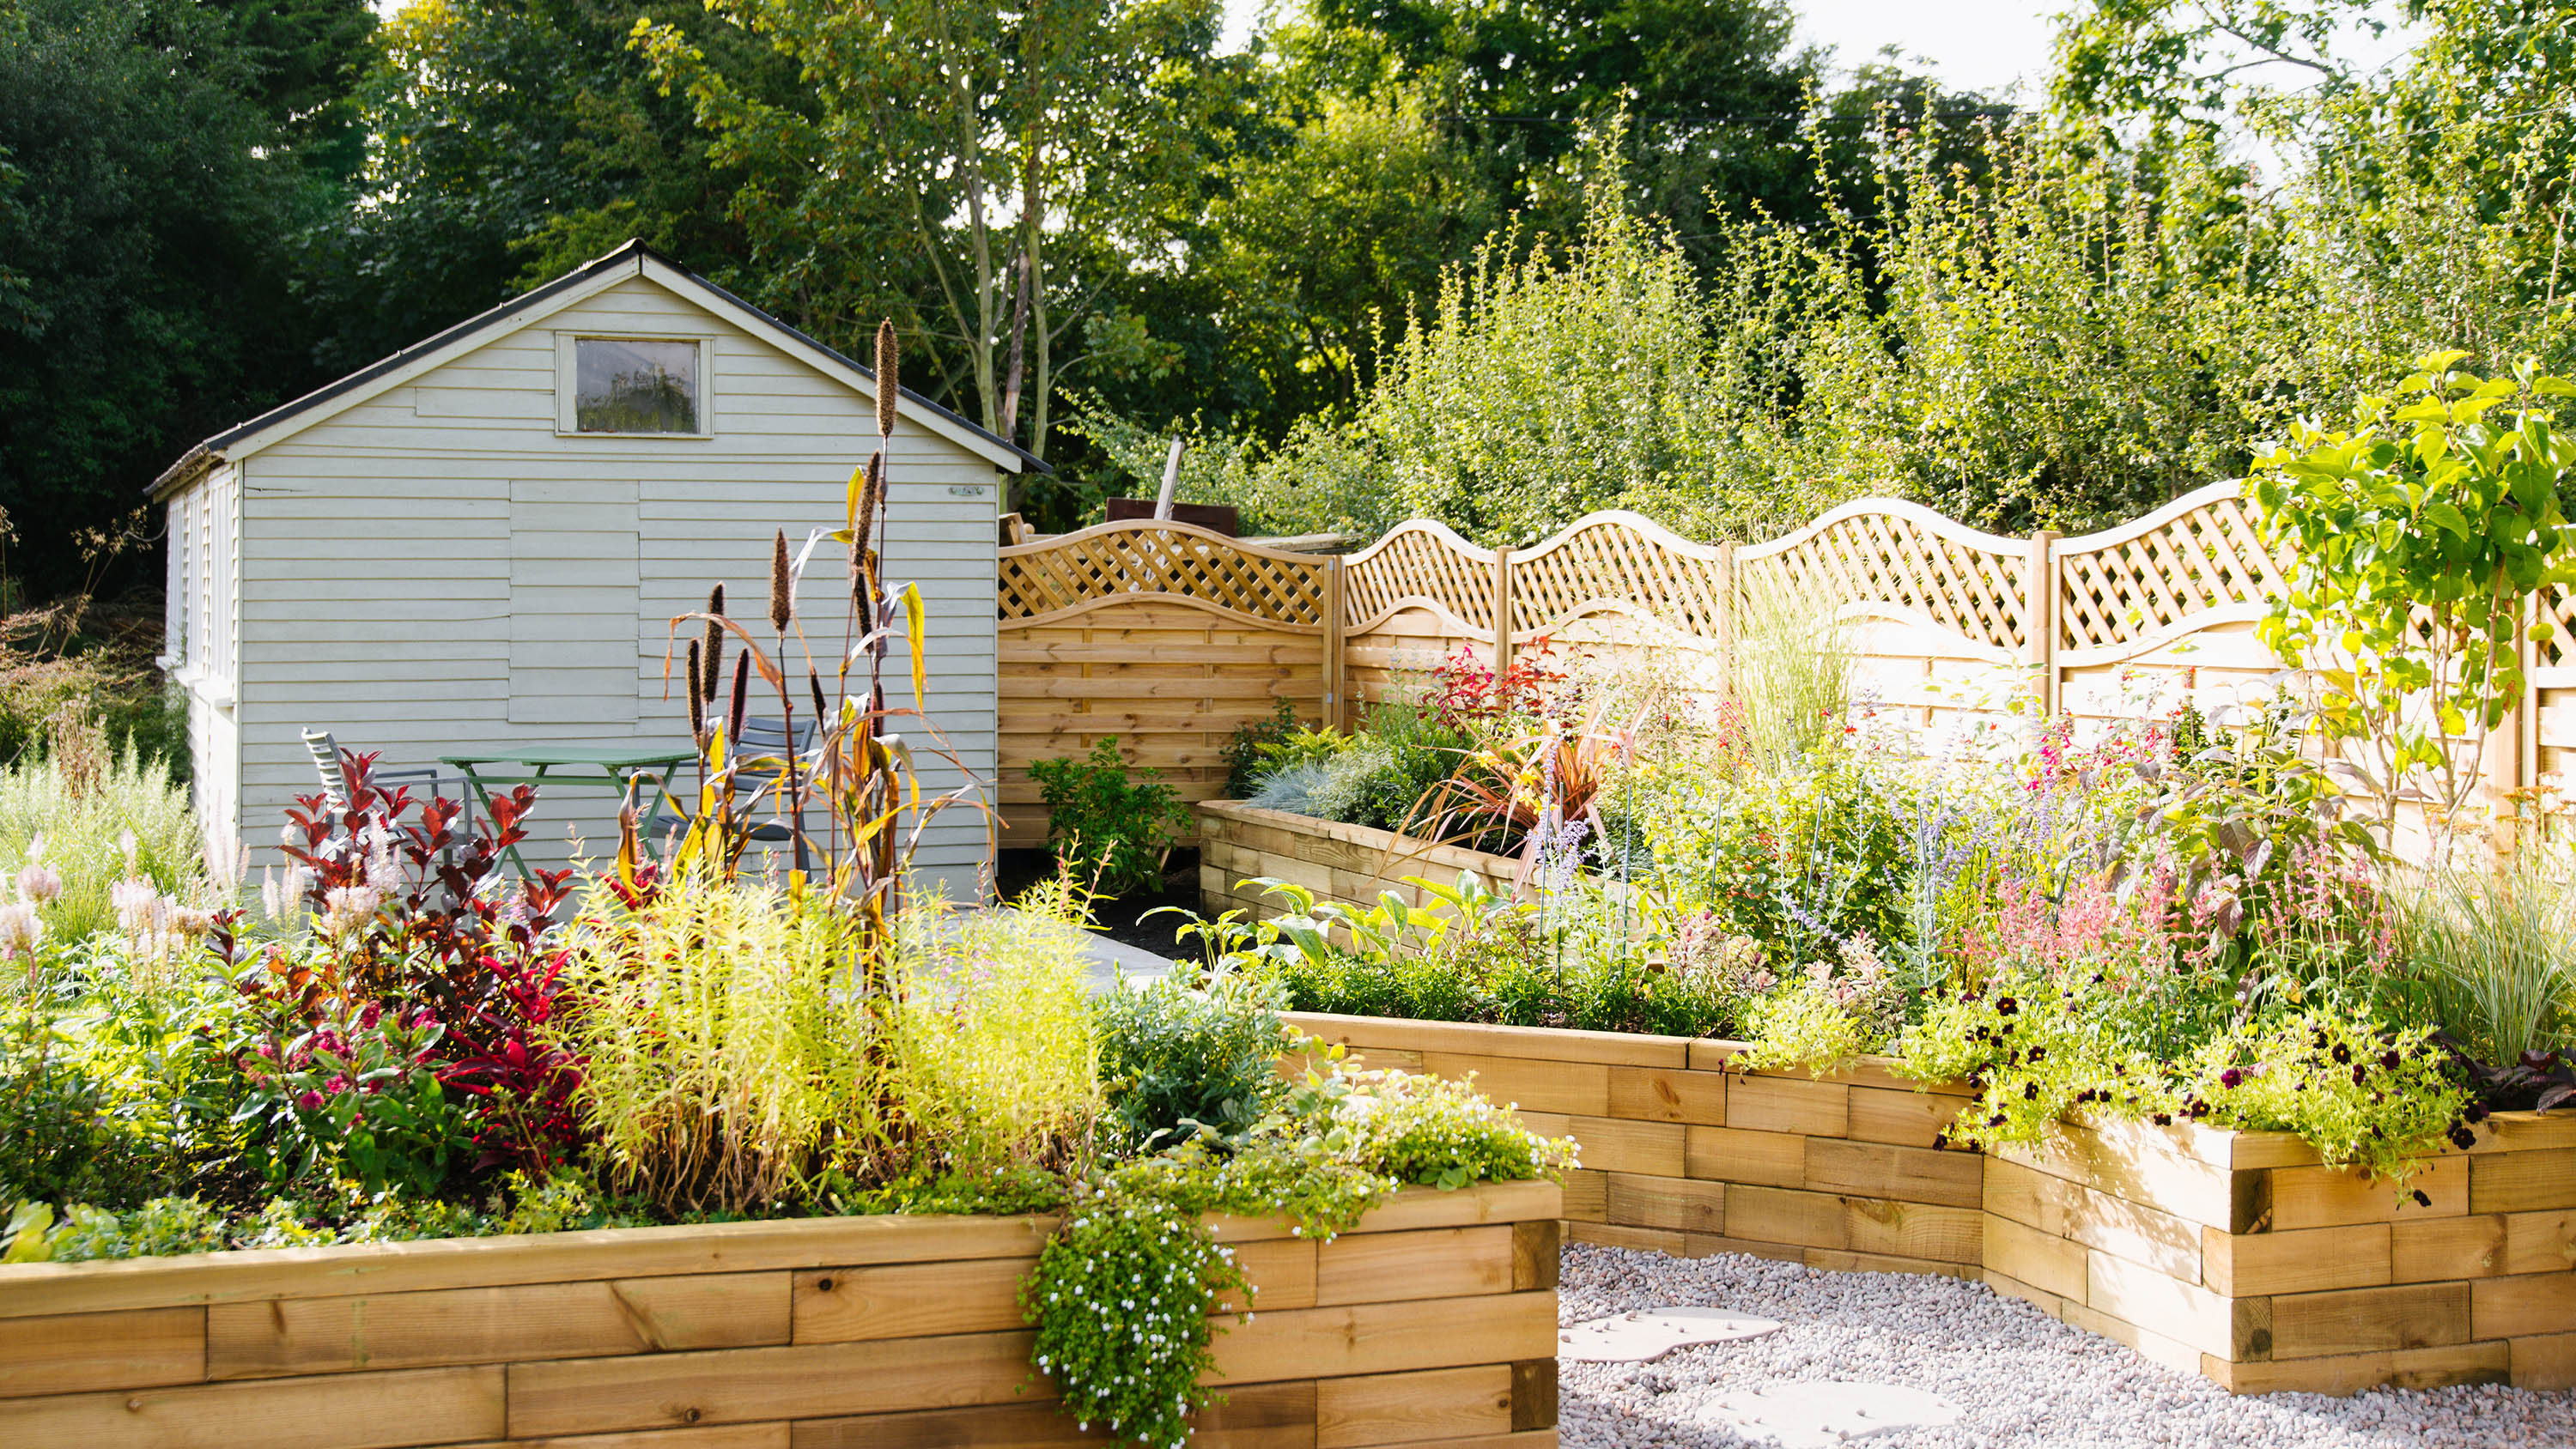 Low maintenance garden ideas 20 stylish ways to create an easy ...